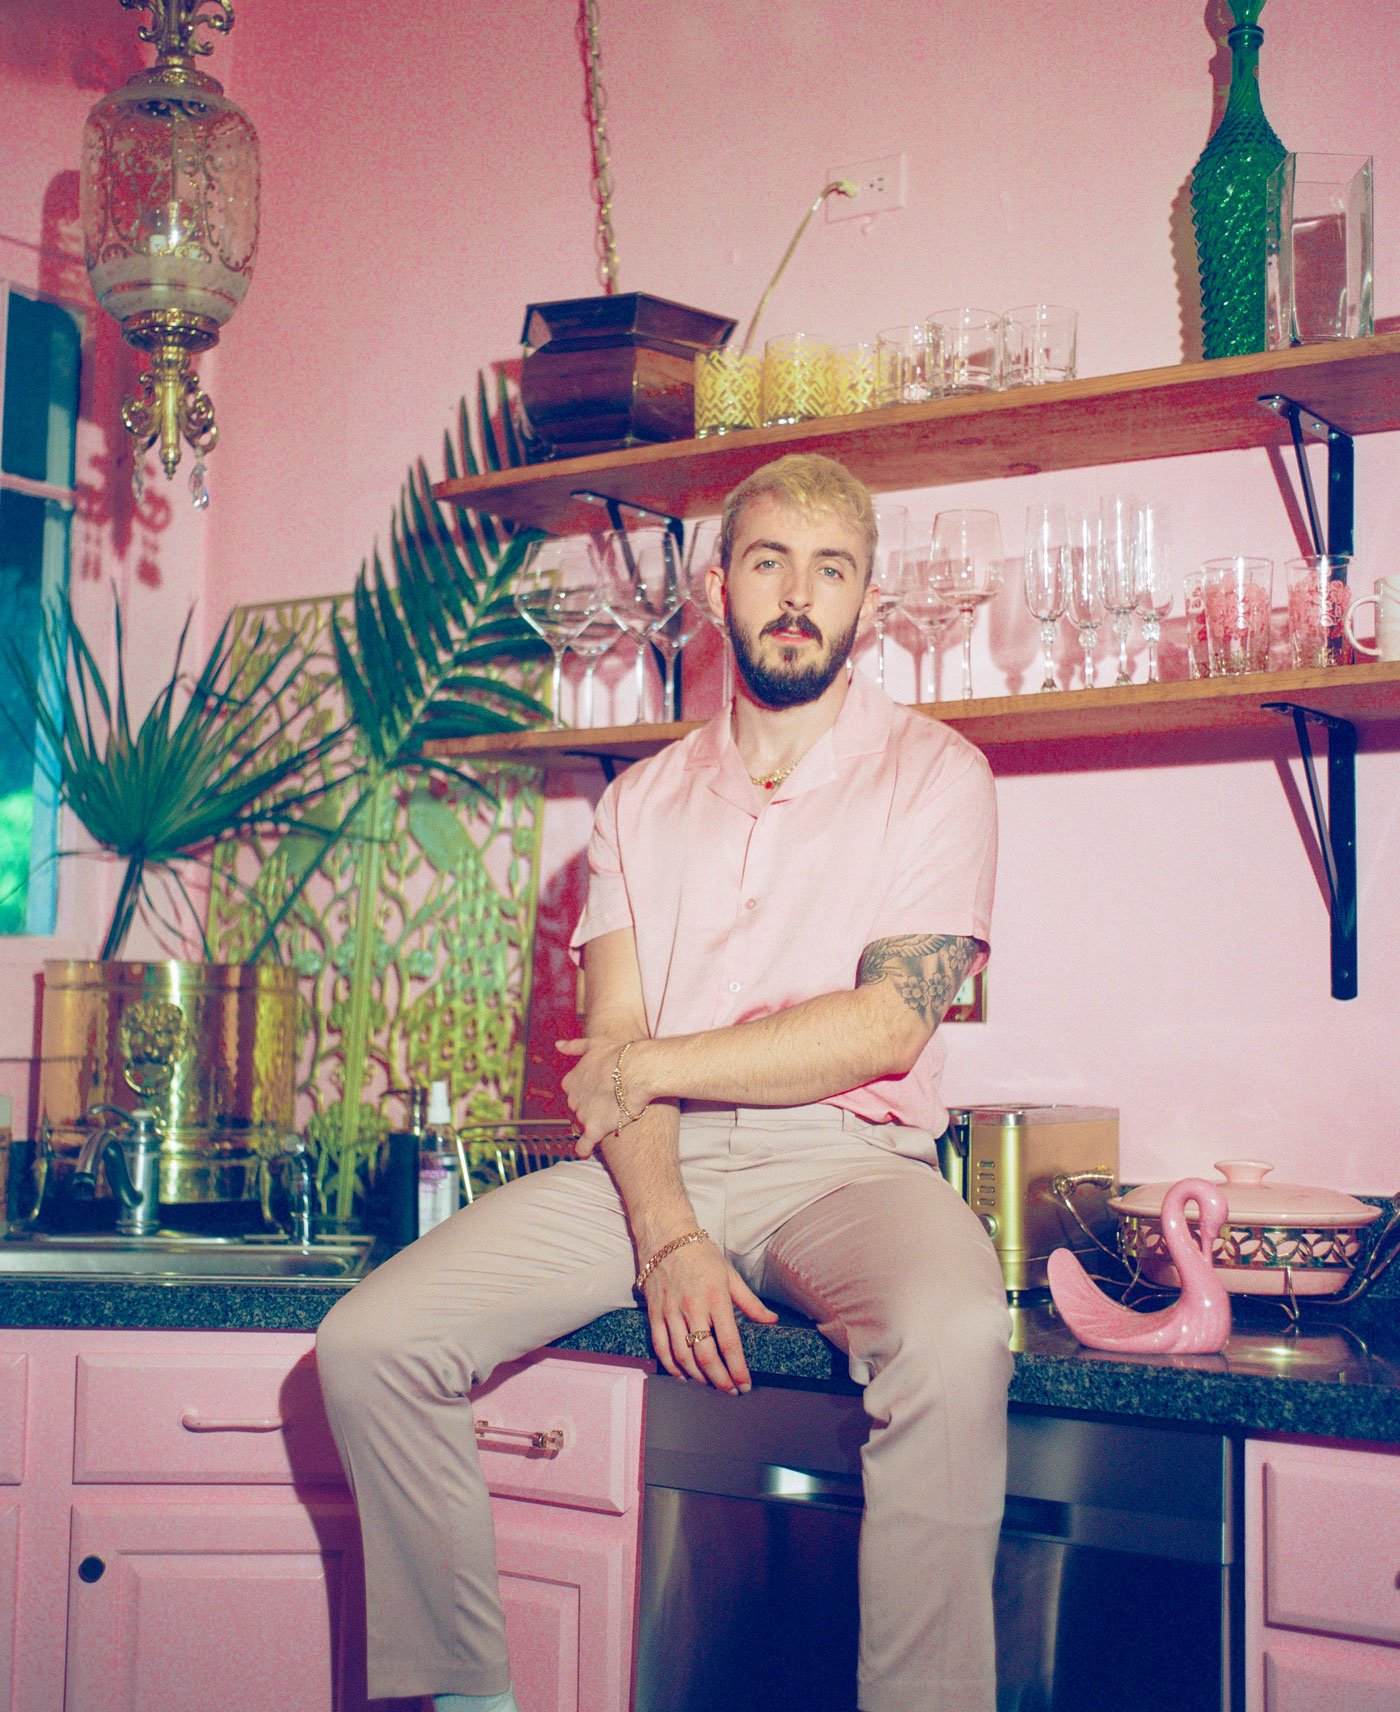 r&b singer alex slay sitting on kitchen counter wearing pink shirt